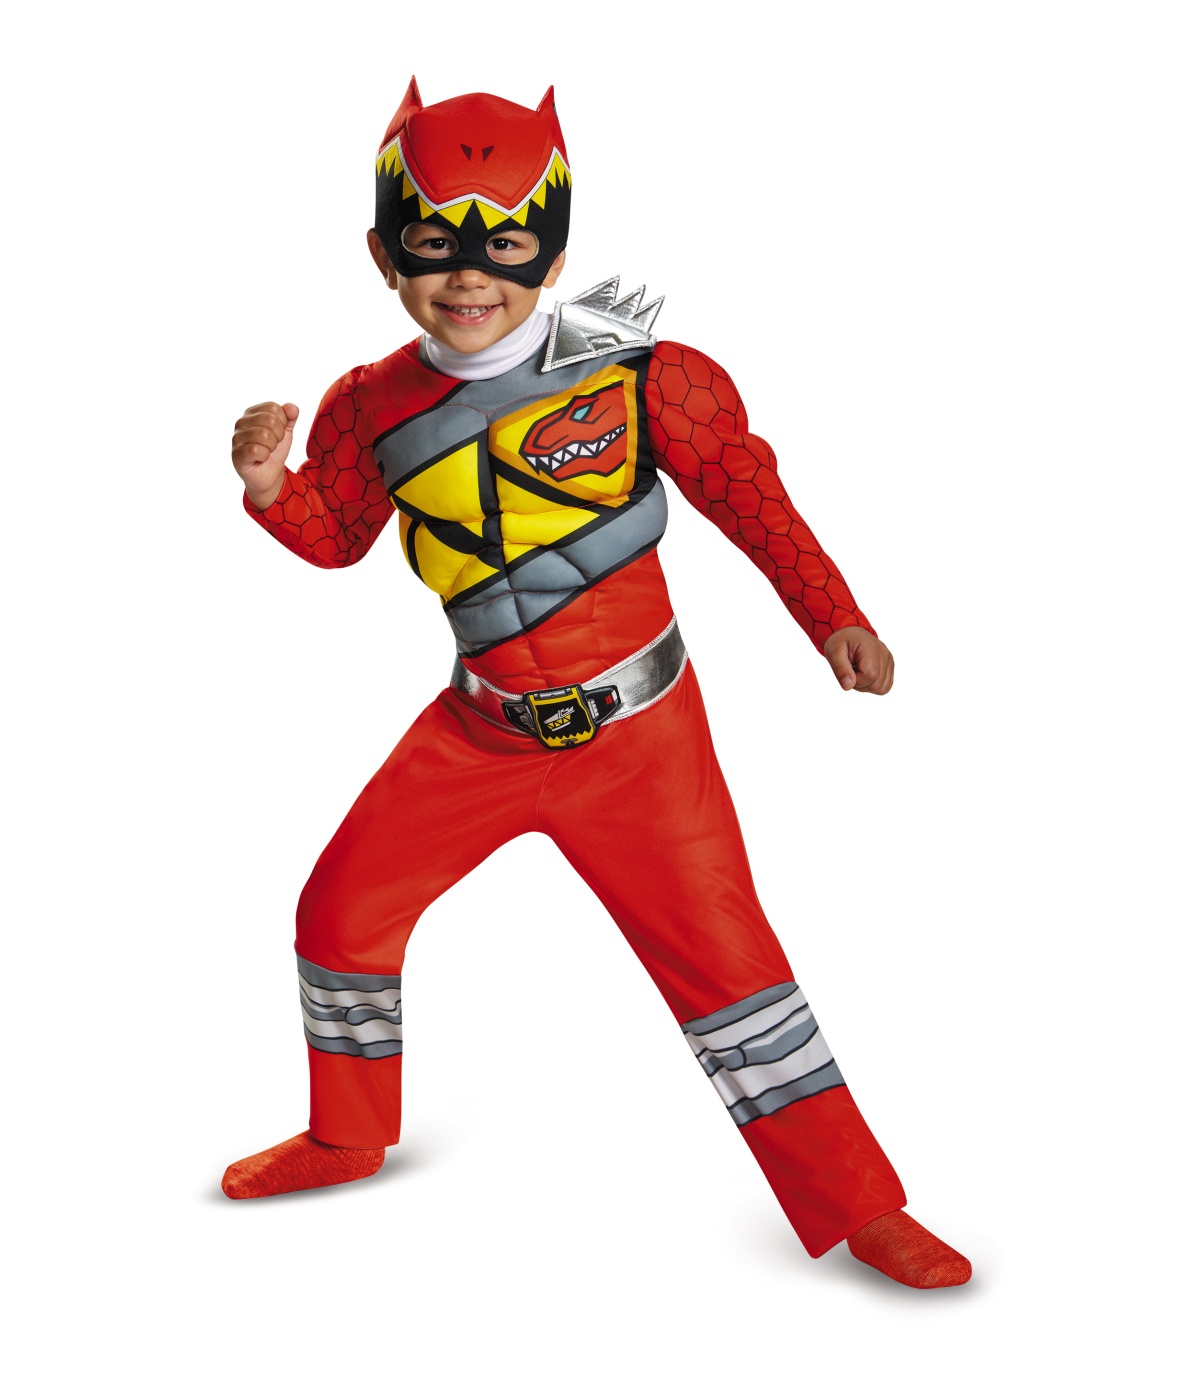  Red Power Ranger Baby Costume